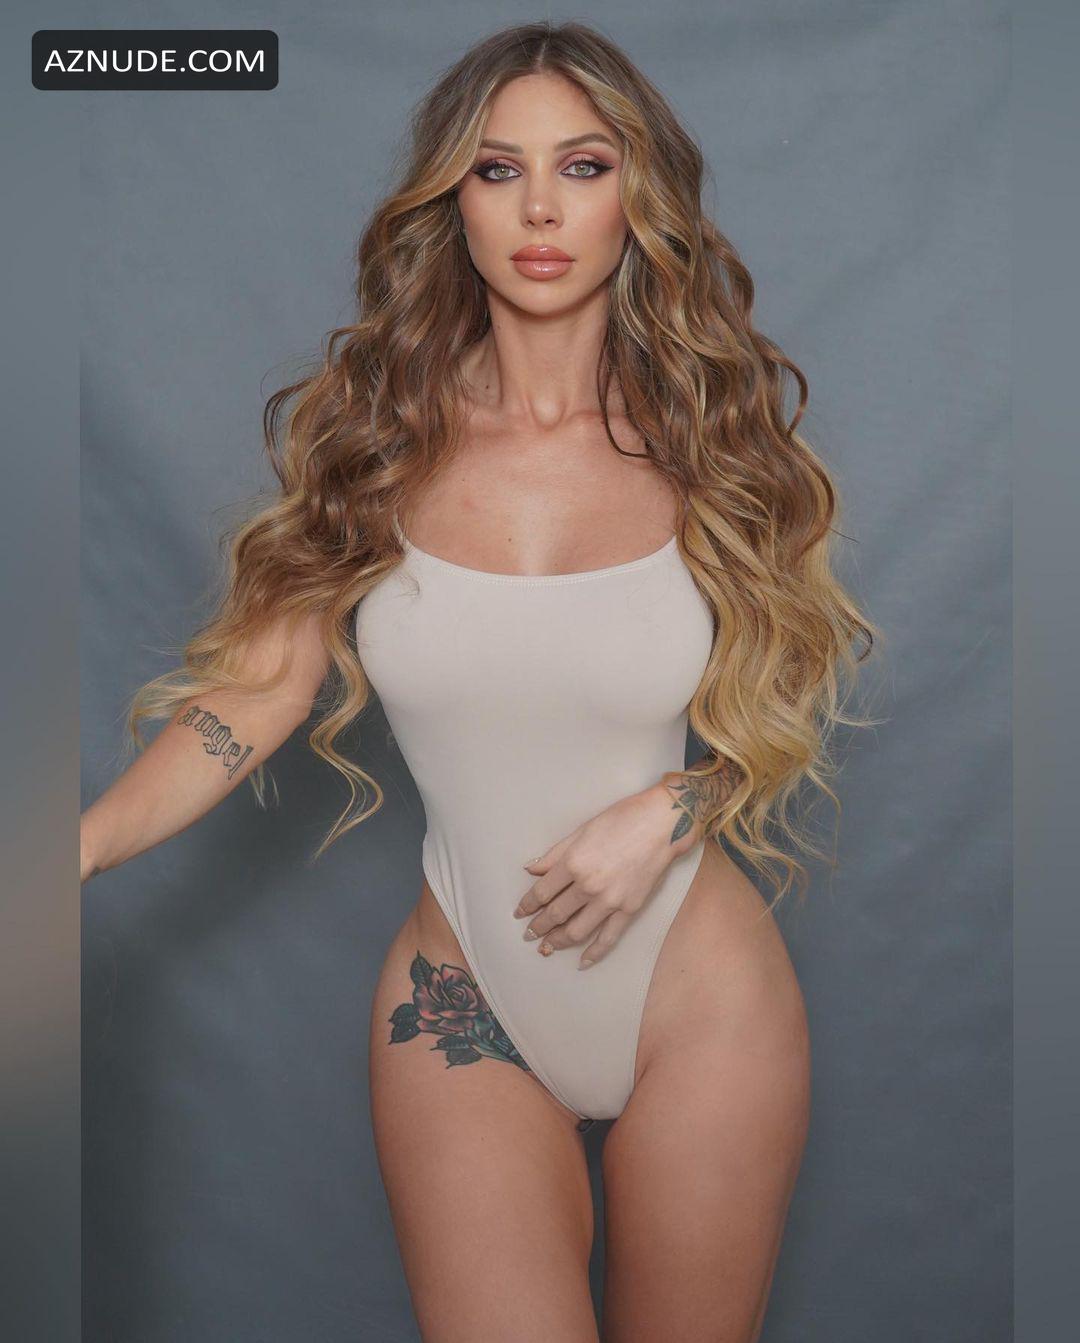 Romina Malaspina Sexy Hot White Bodysuit Photoshoot Showcasing Her Stunning Body Aznude